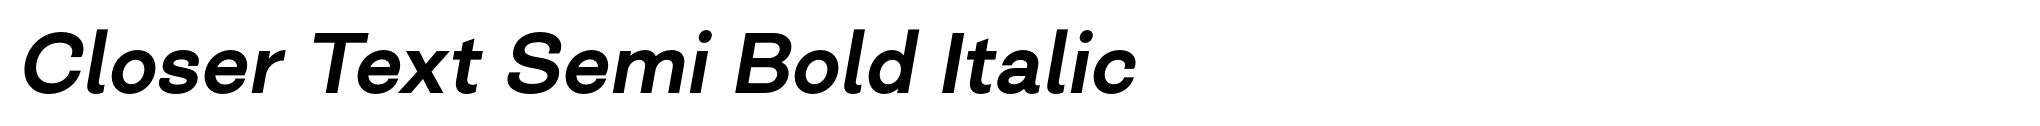 Closer Text Semi Bold Italic image